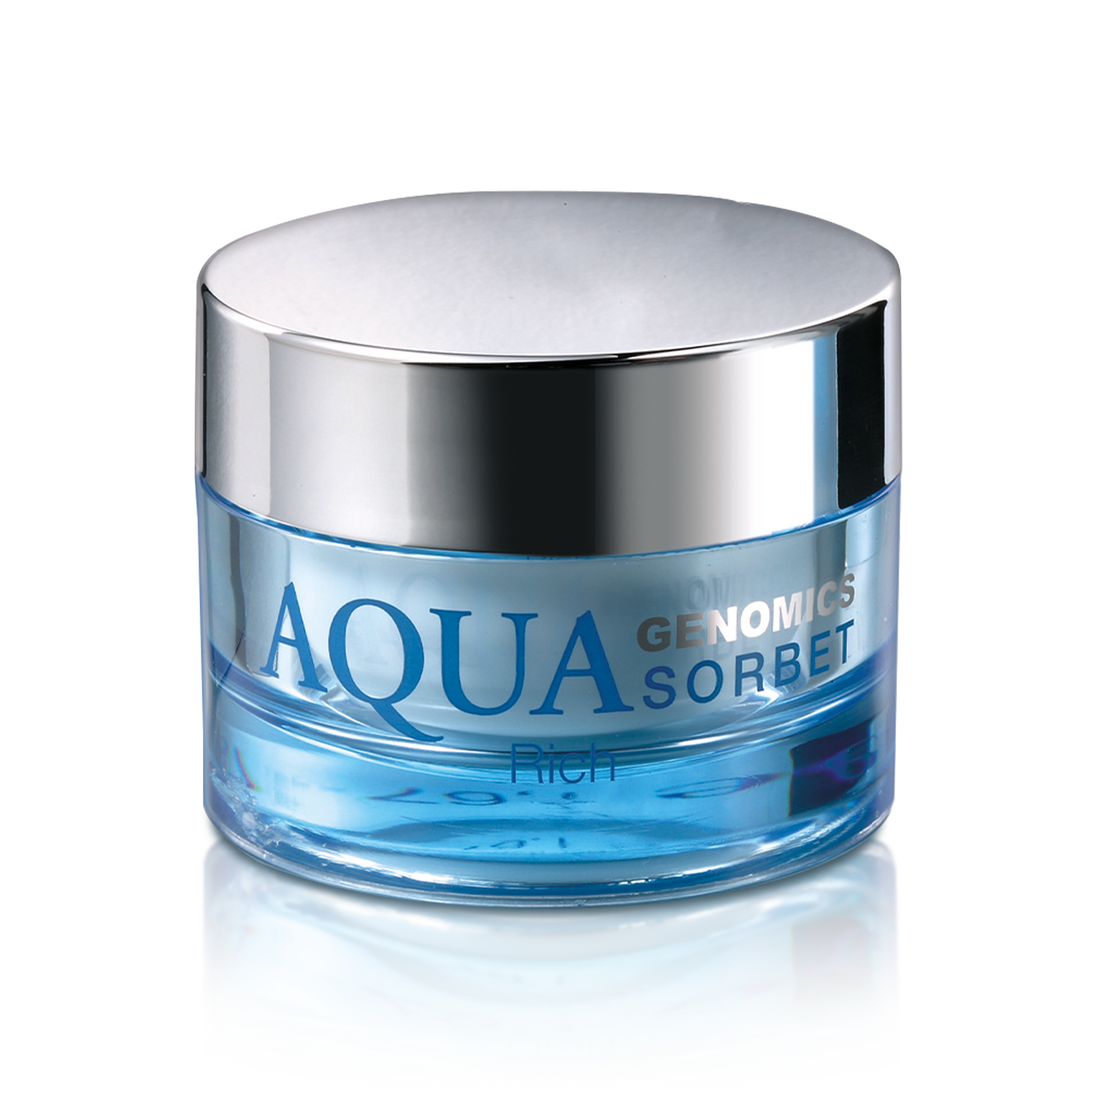 Aqua Genomics Sorbet Rich Moisturizing Cream